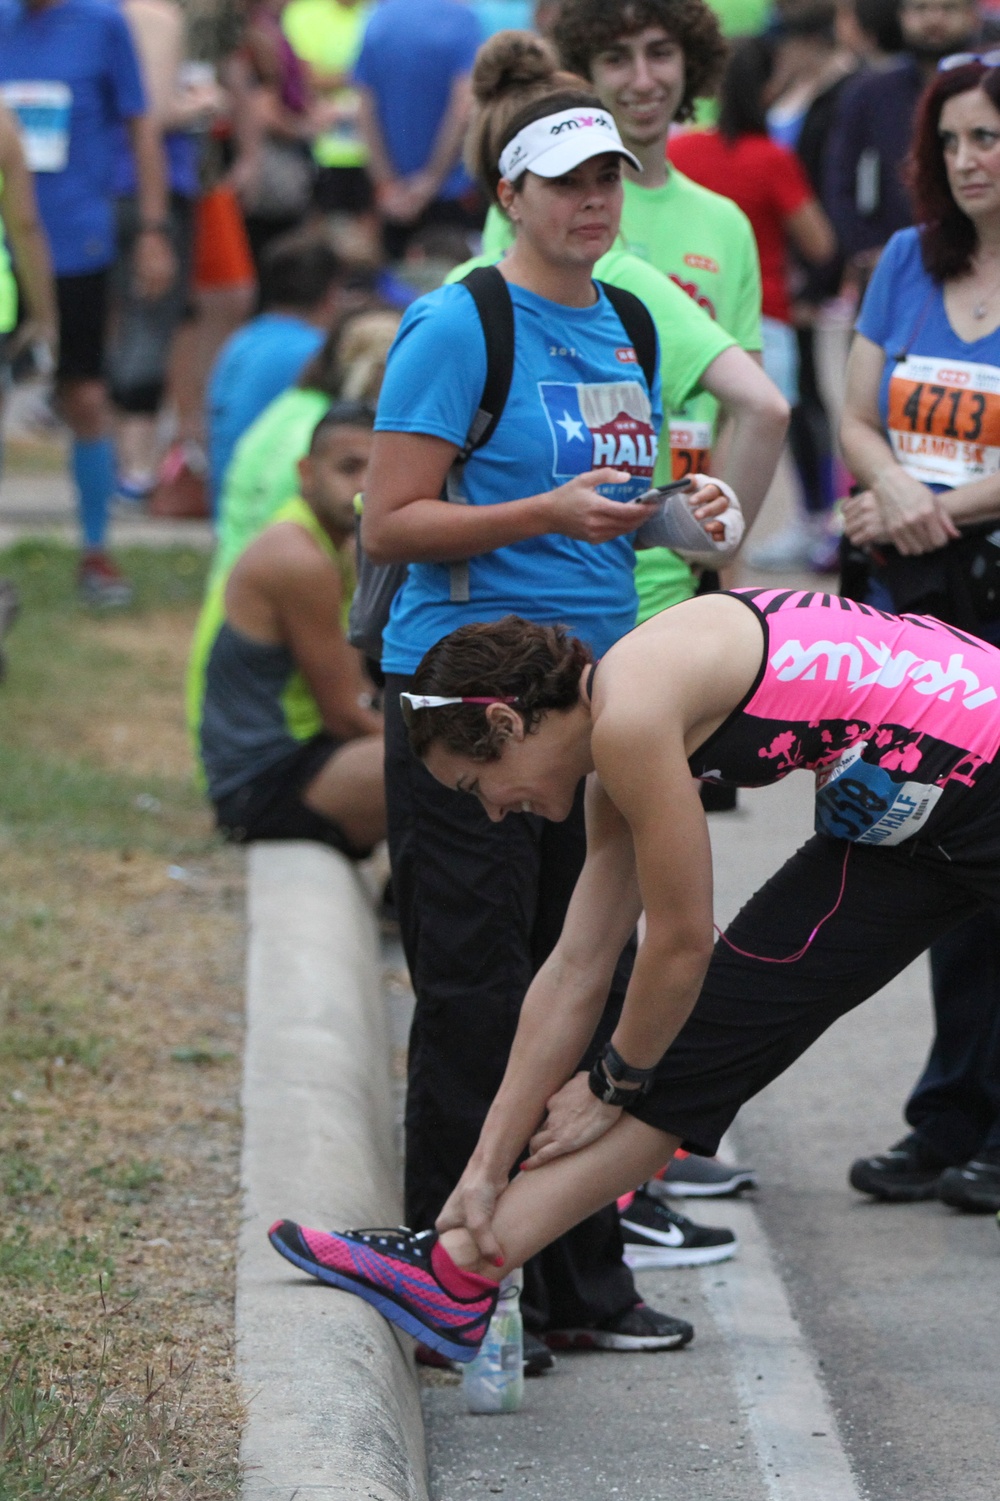 DVIDS Images Alamo Run Fest Community races forward to stronger